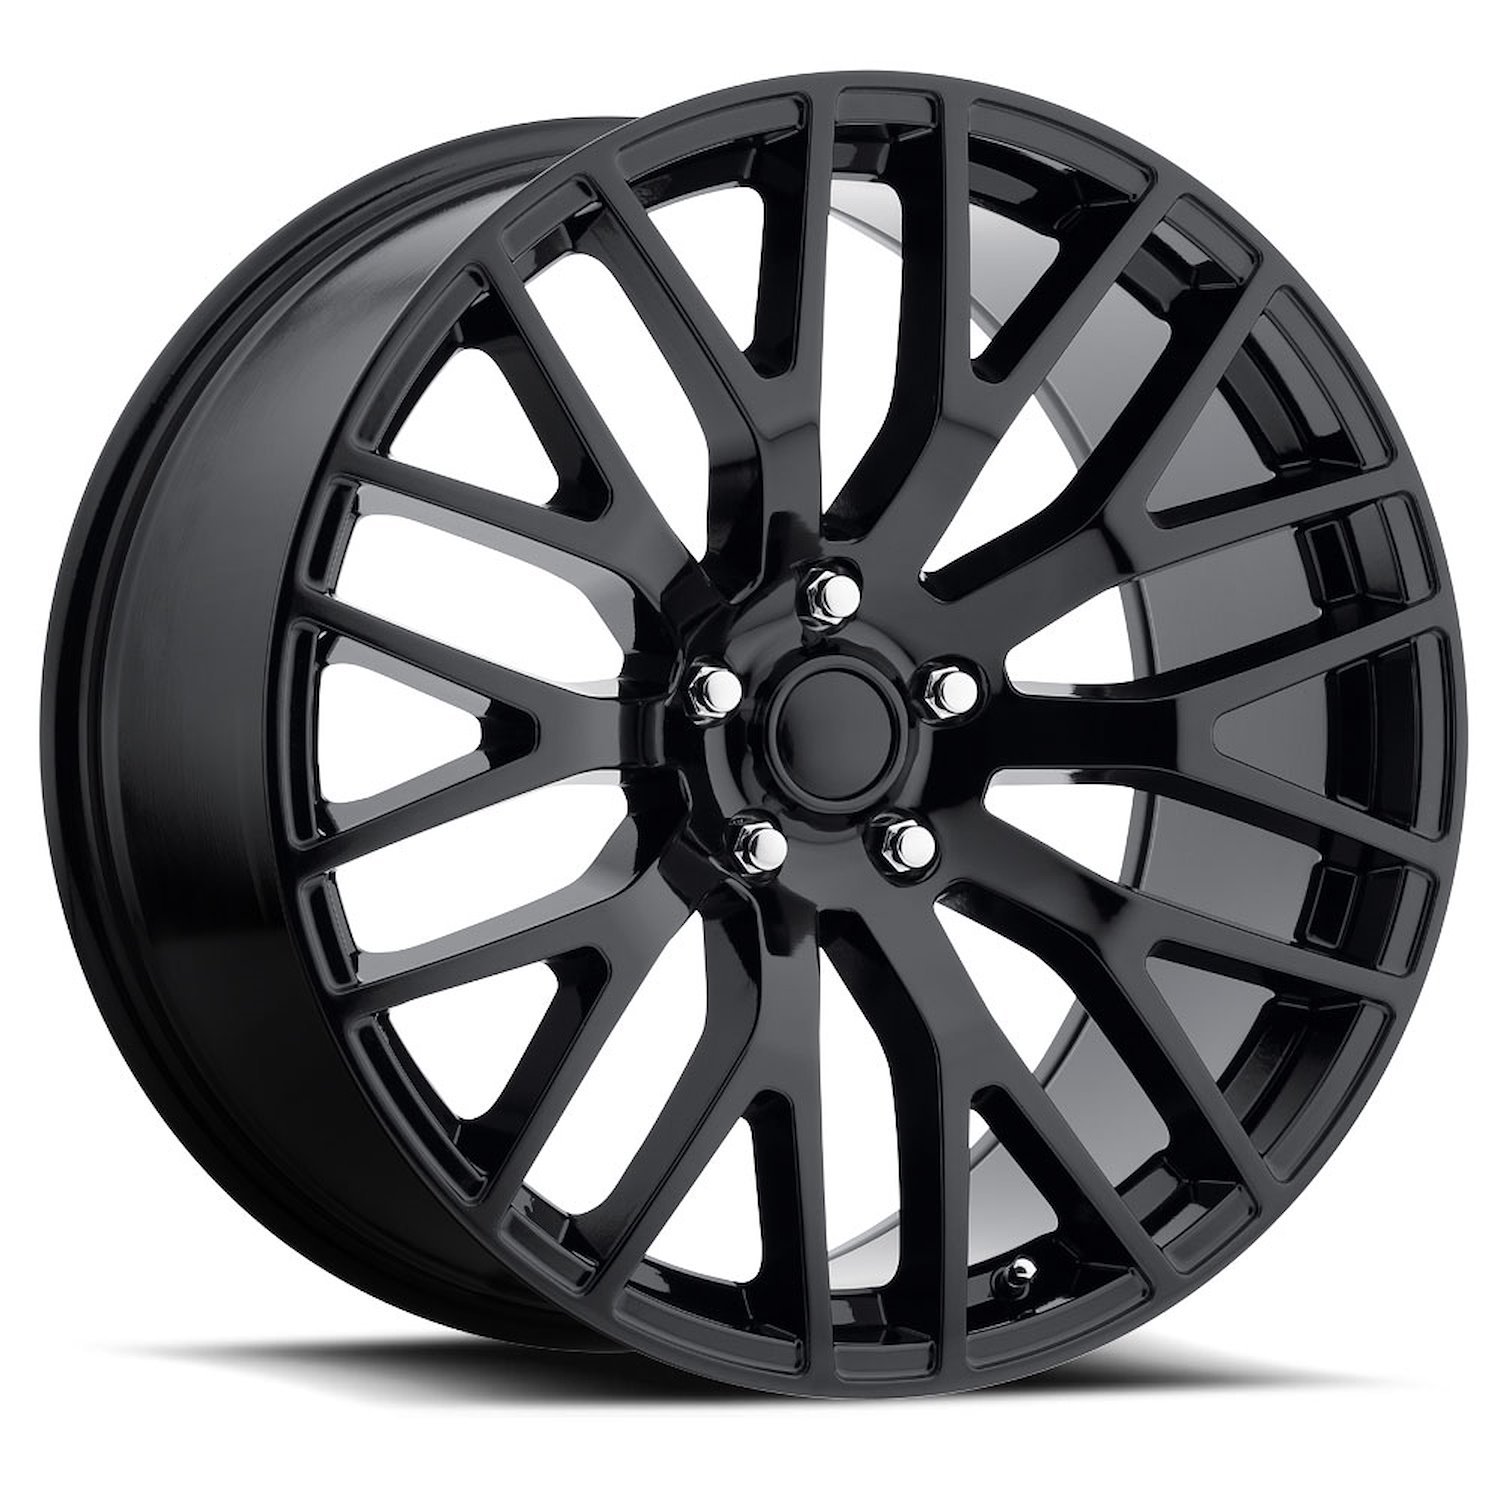 Replica PER 210-5114-48 GB Mustang Performance Wheel [Size: 20" x 10"] Finish: Gloss Black